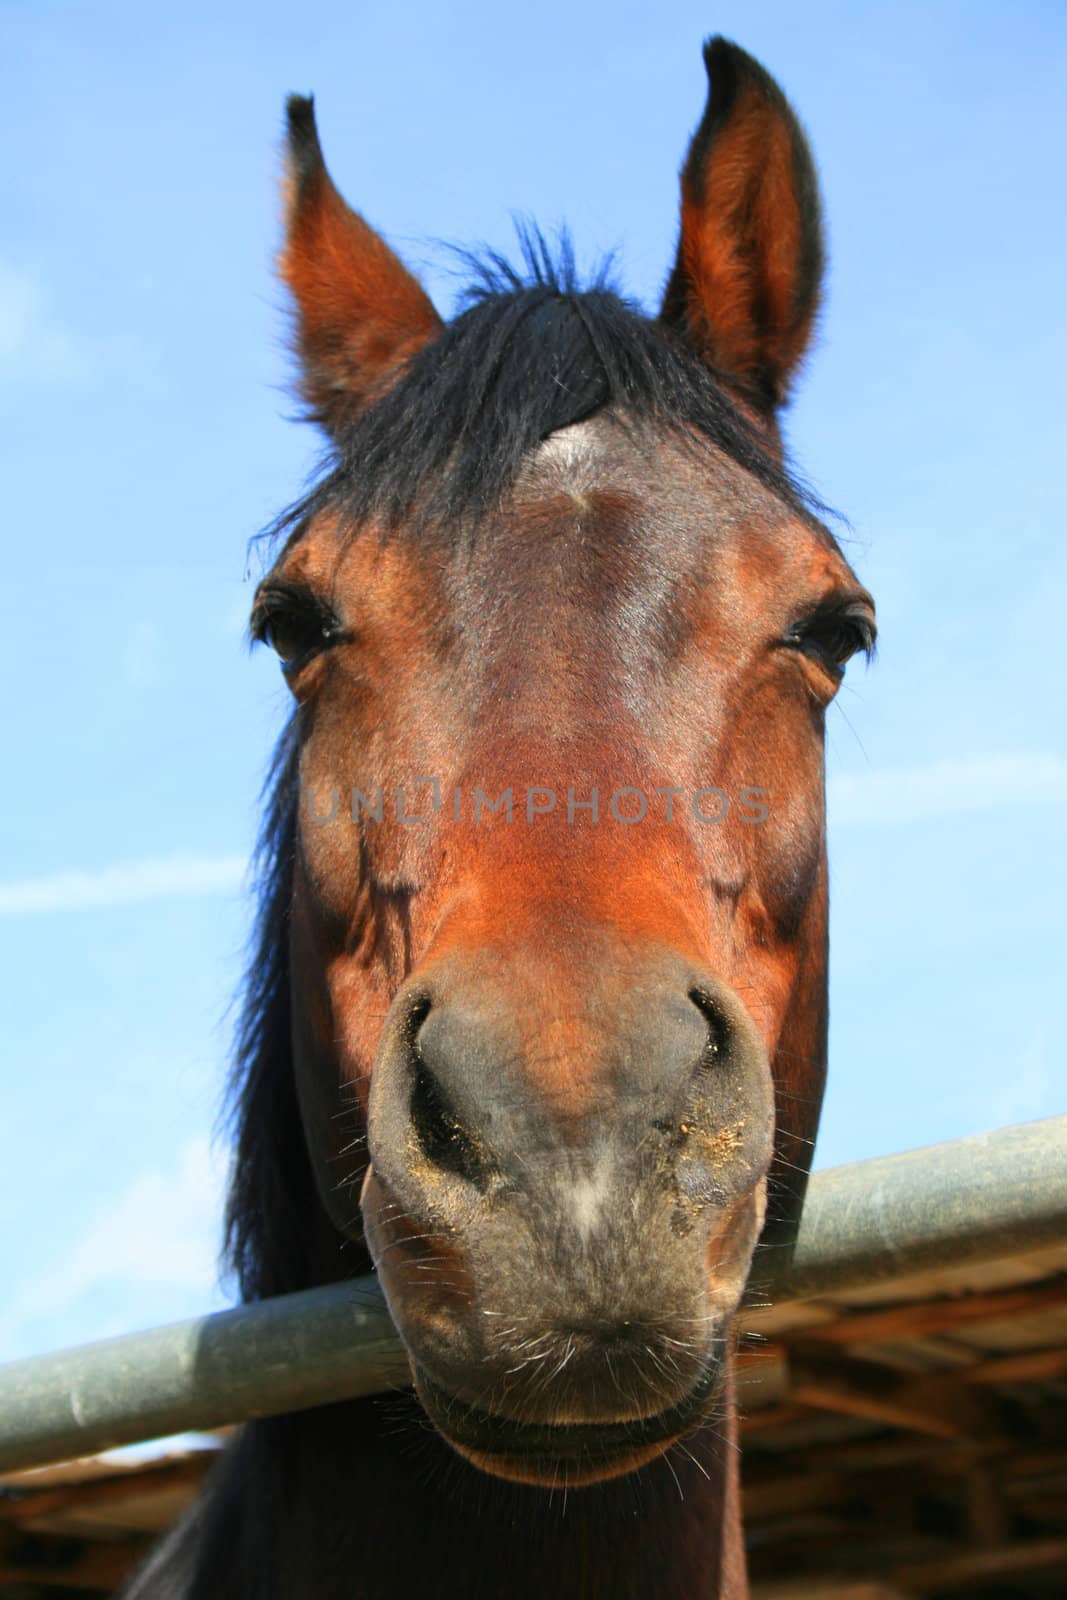 Headshot of a horse at the farm.
